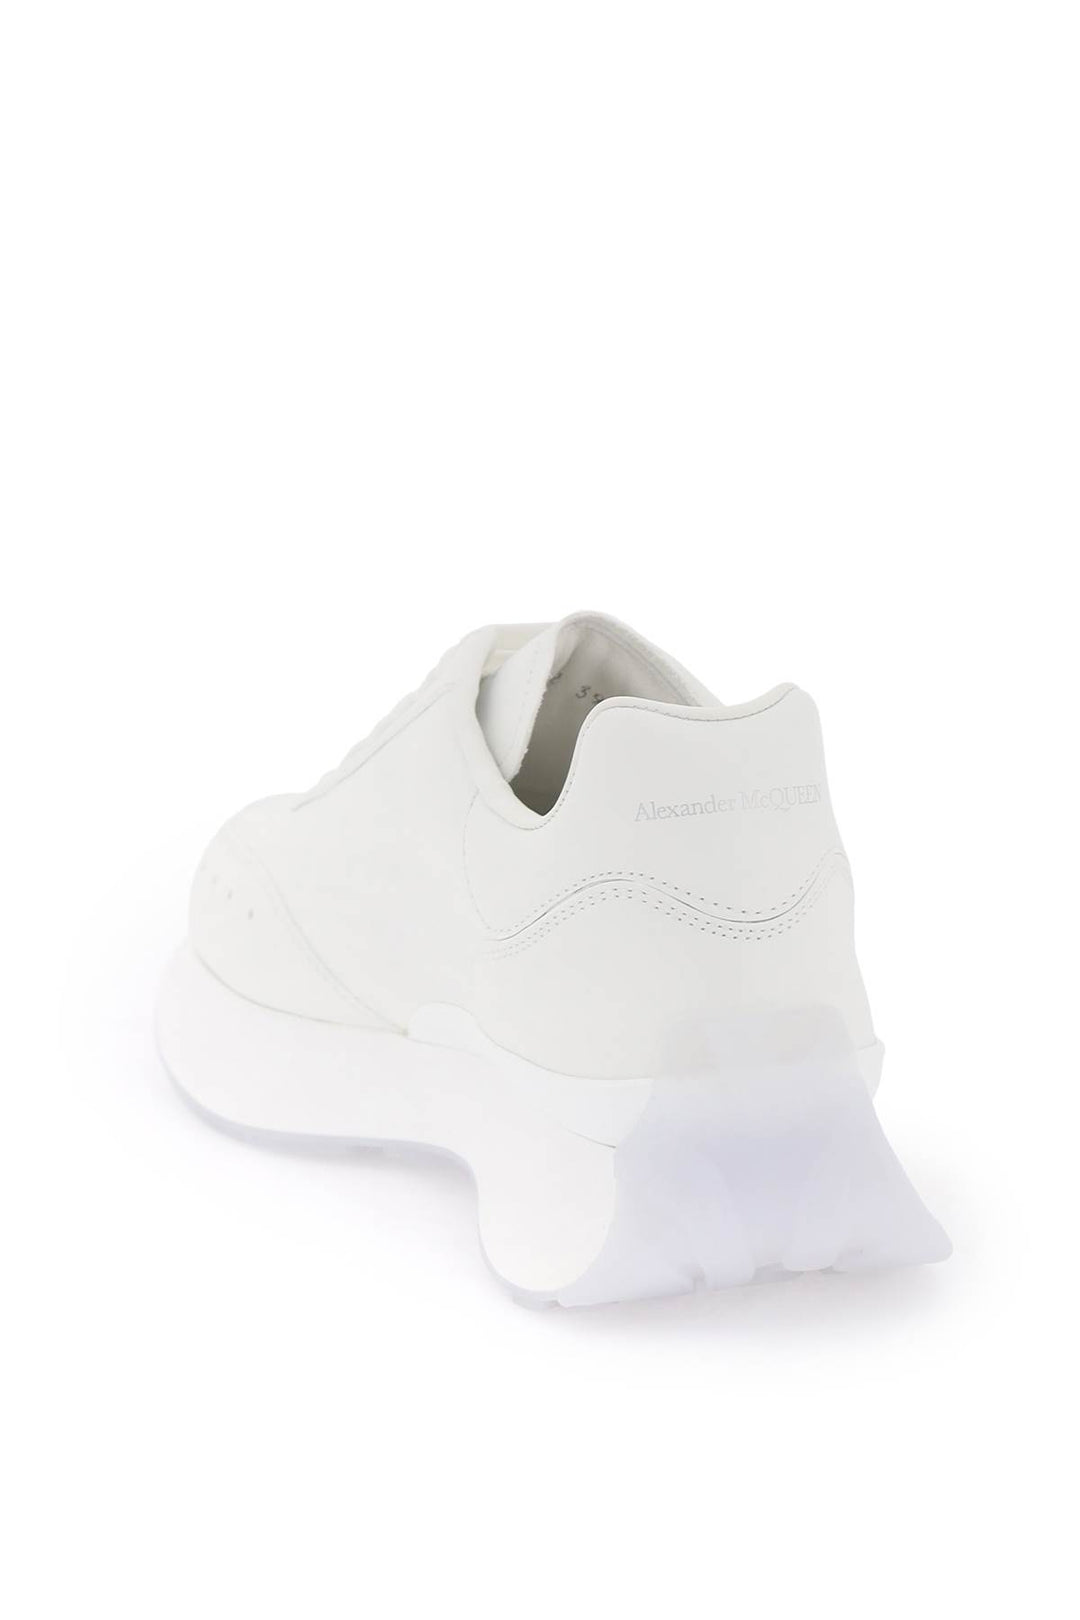 Alexander Mcqueen Leather Sprint Runner Sneakers   White